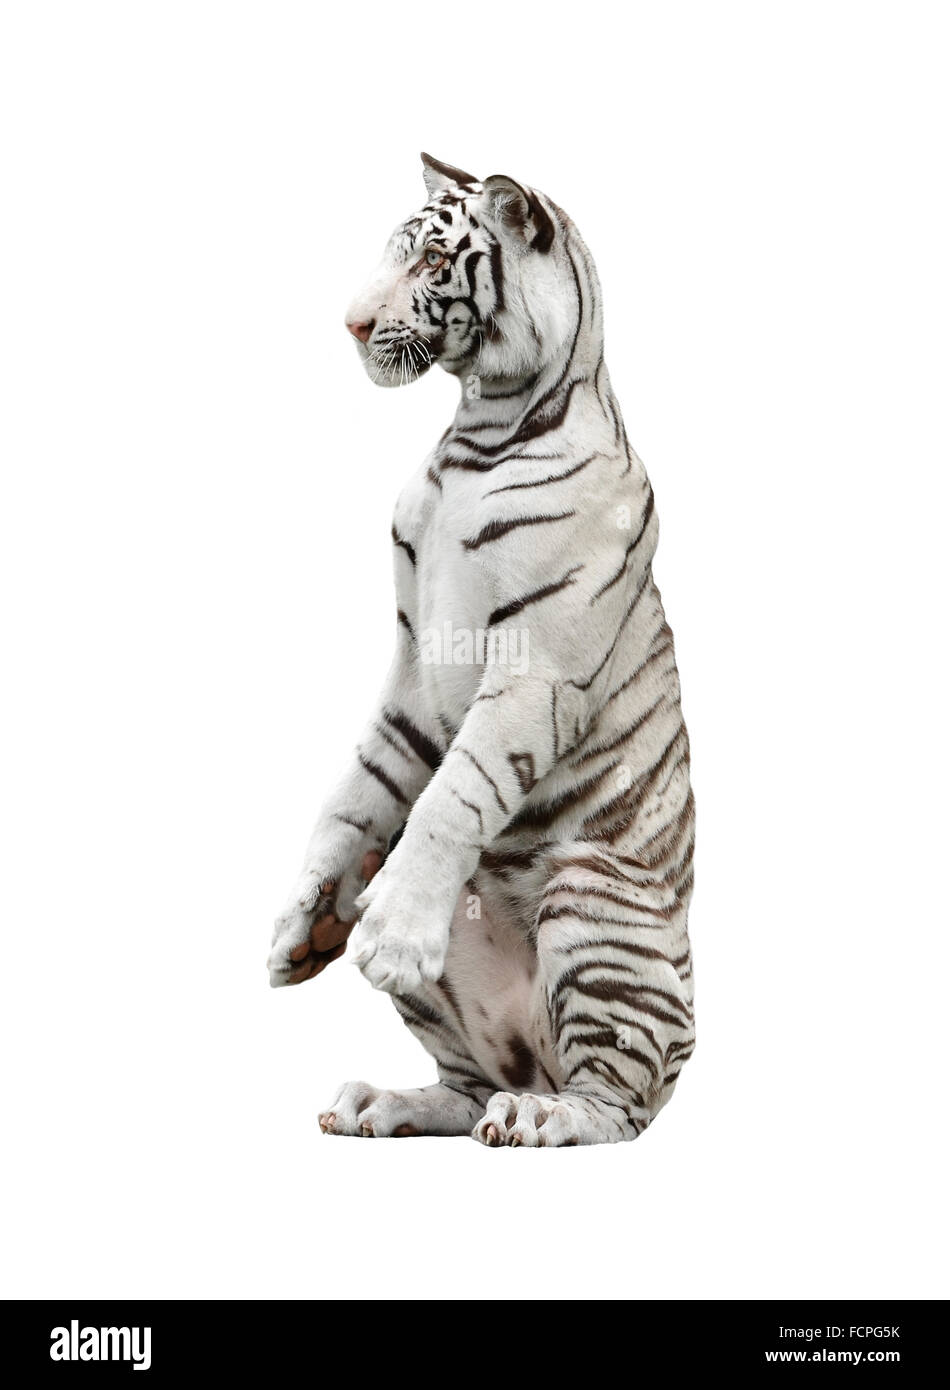 white bengal tiger isolated on white background Stock Photo